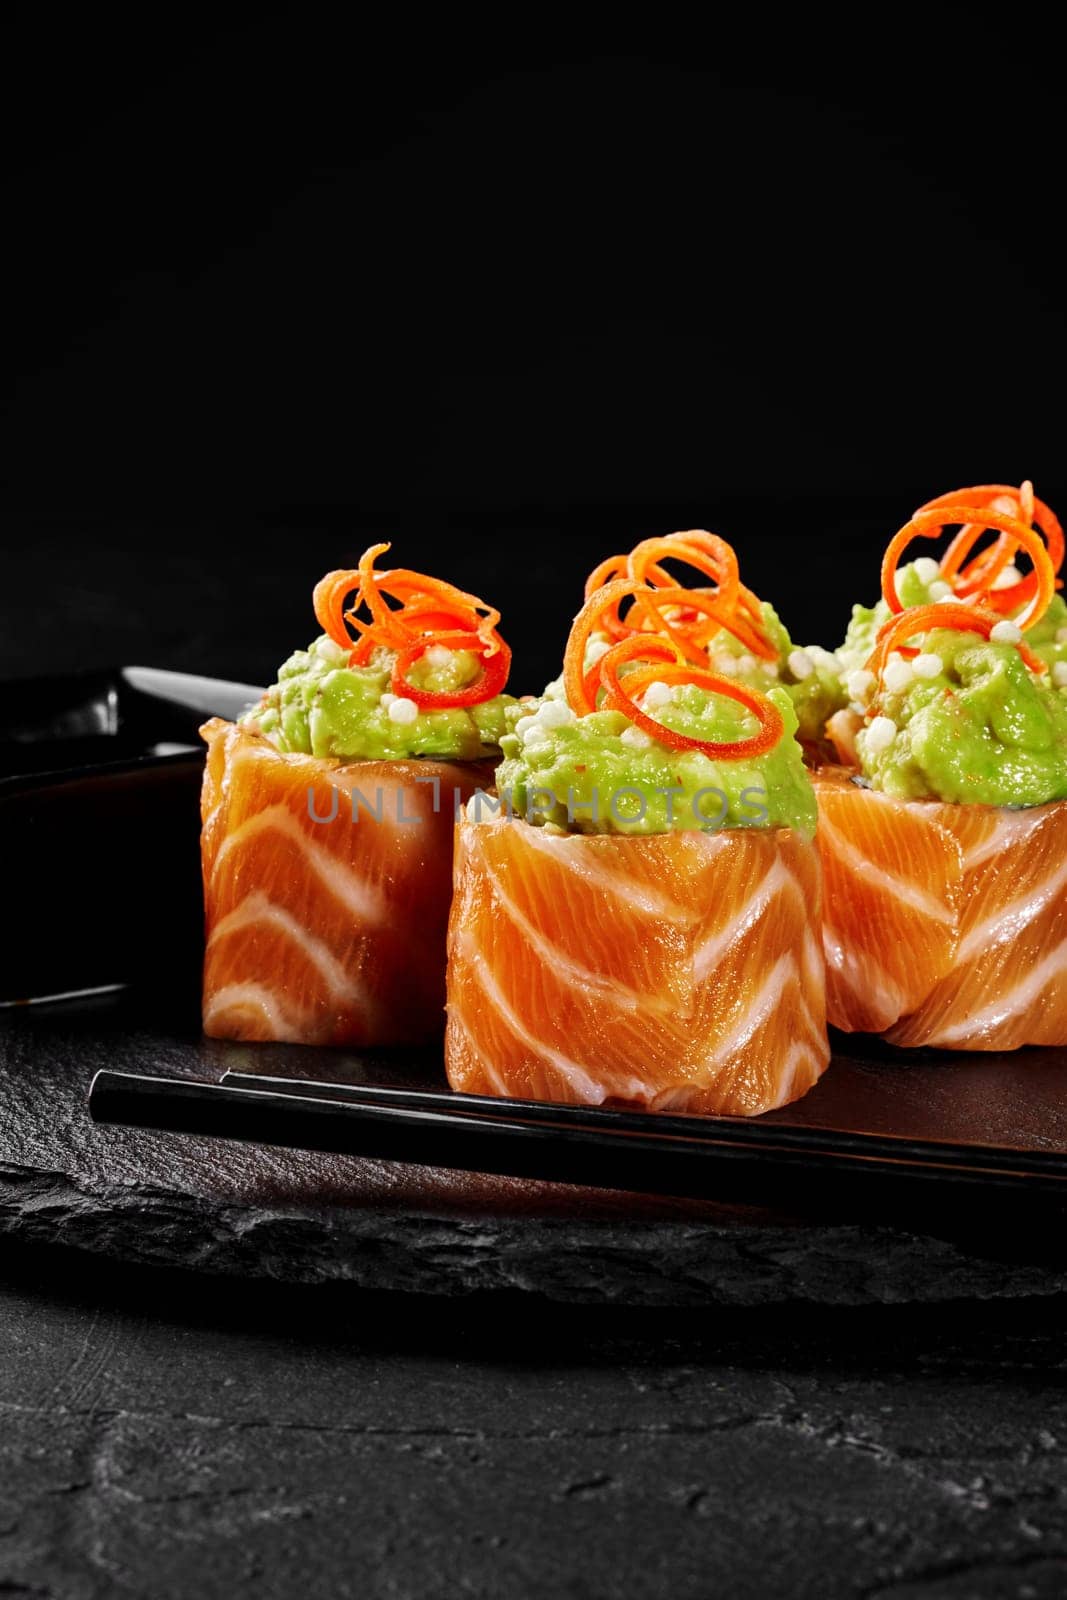 Salmon wrapped sushi rolls with crushed avocado and wasabi by nazarovsergey